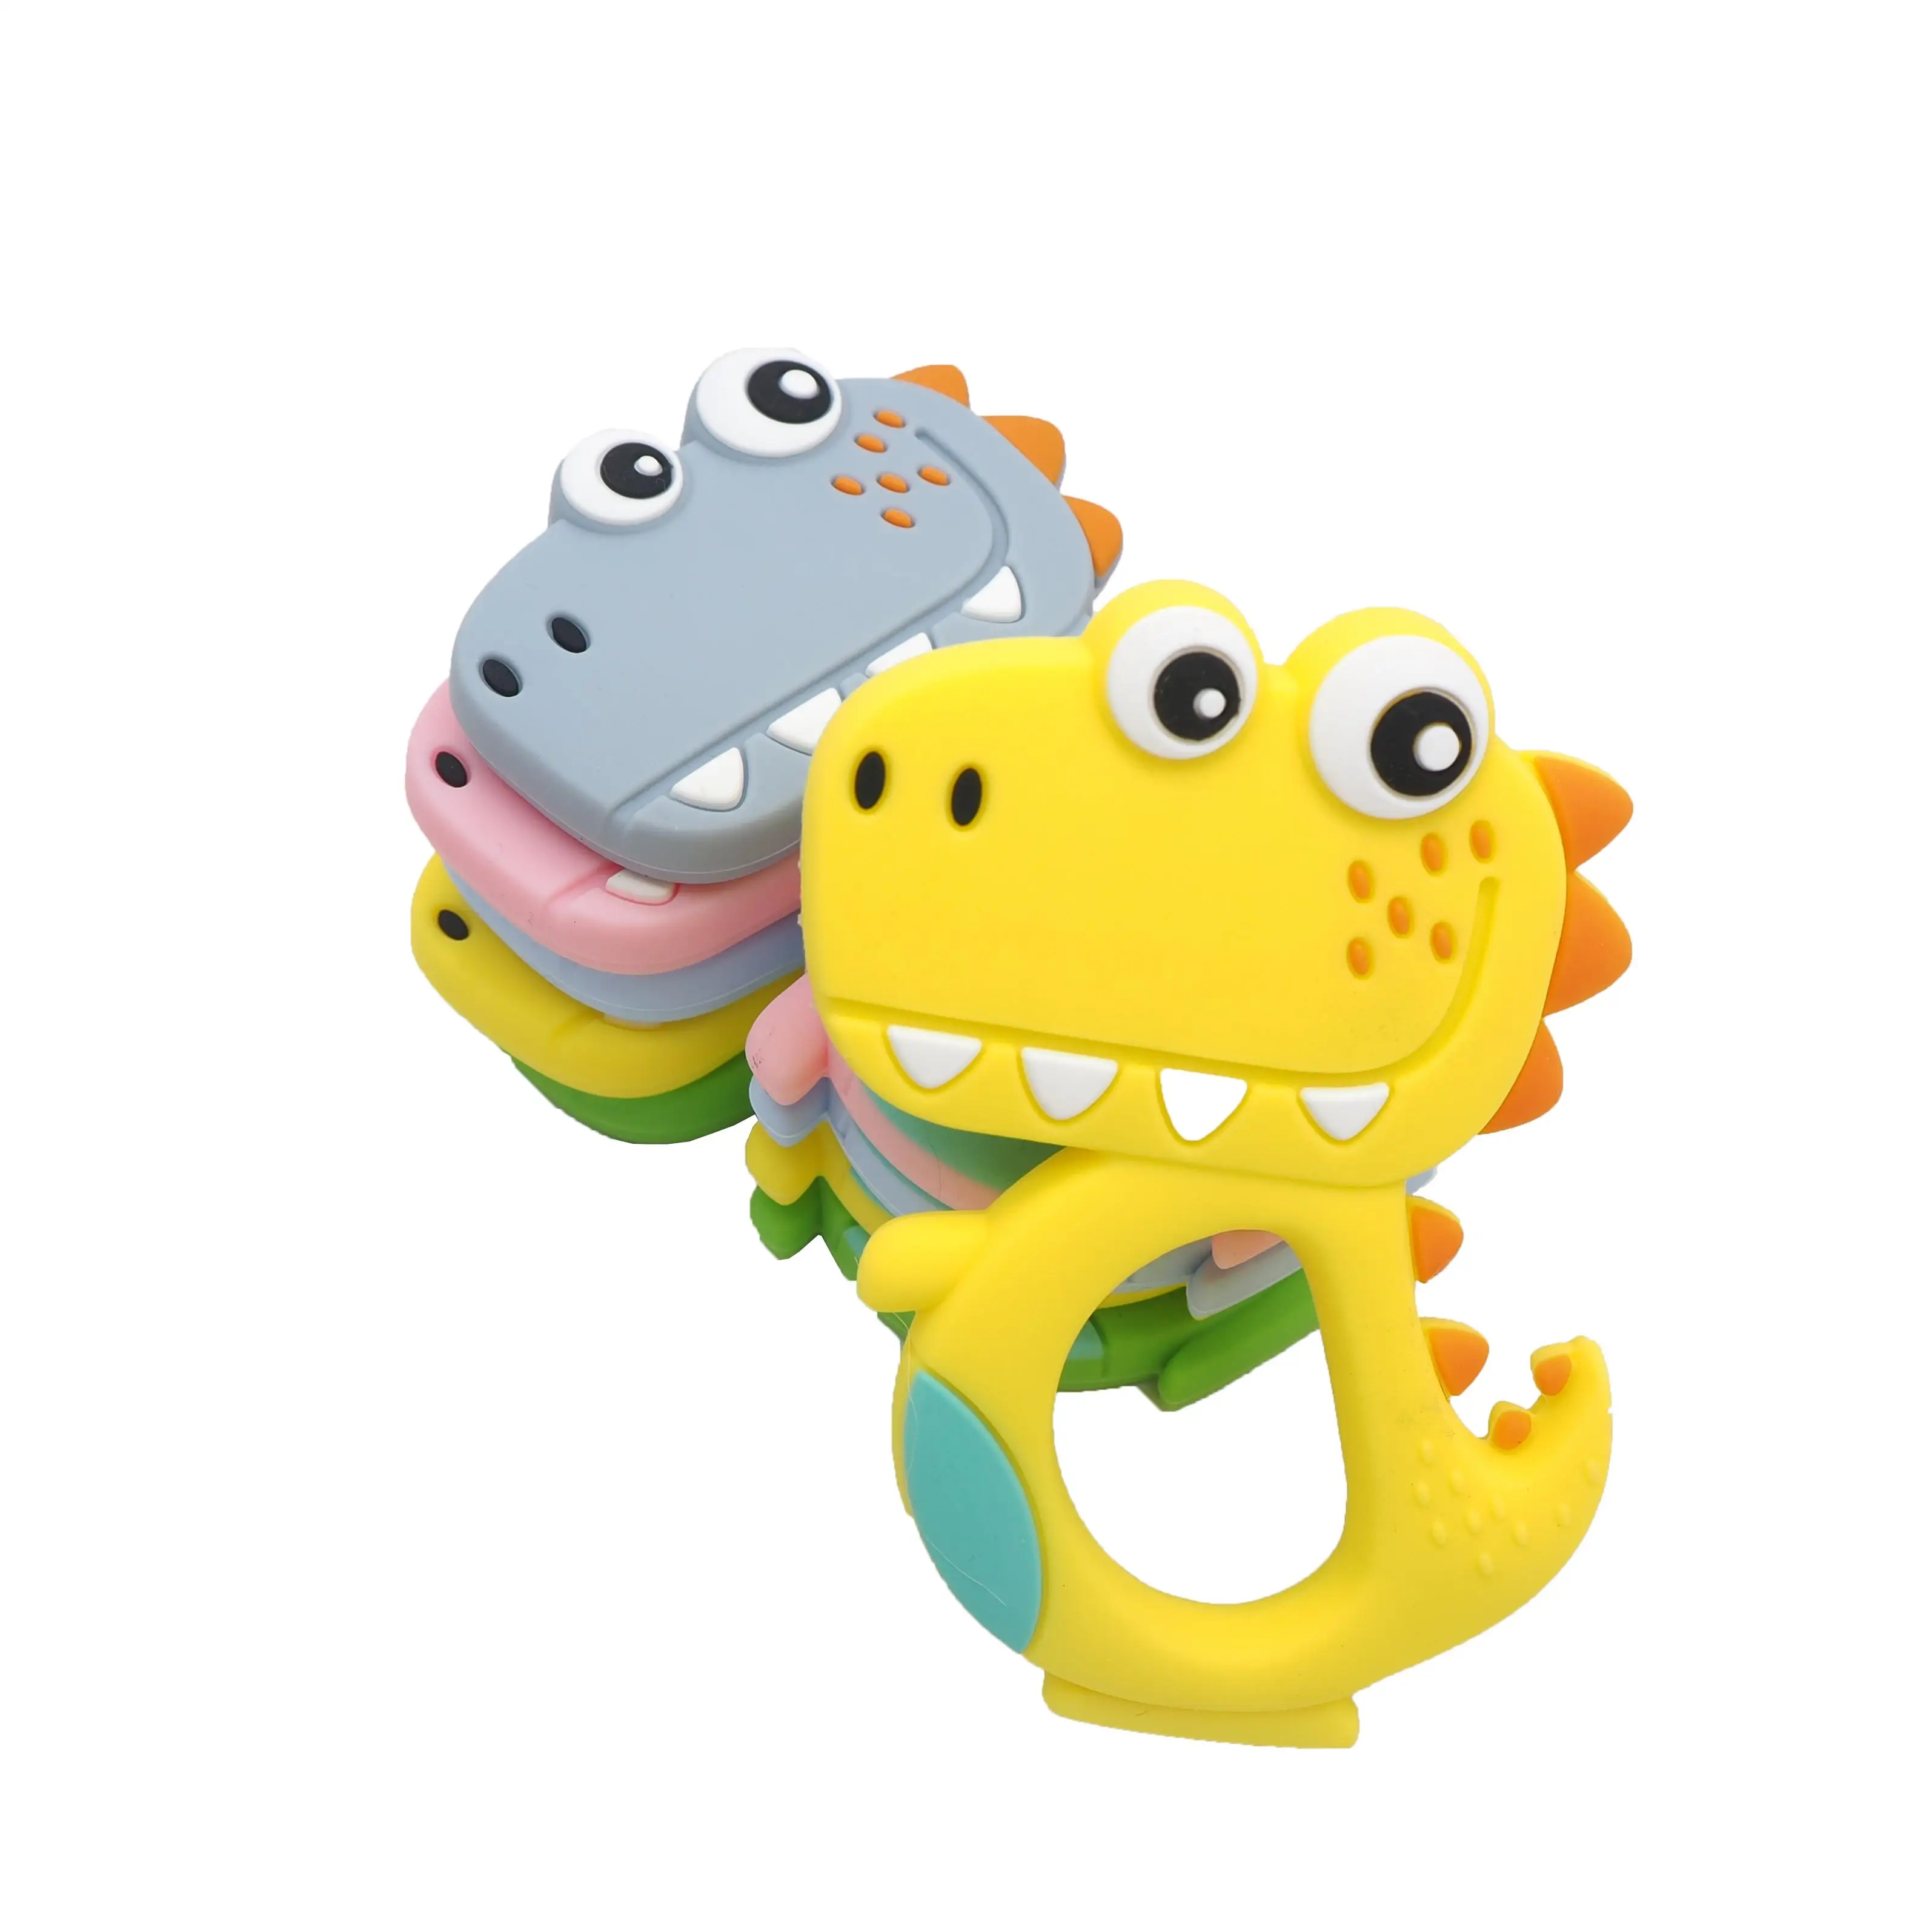 Chenkai 50PCS Silicone Dinosaur Teethers Baby Cute Cartoon Teething BPA Free For DIY Infant Dummy Sensory Pacifier Accessories